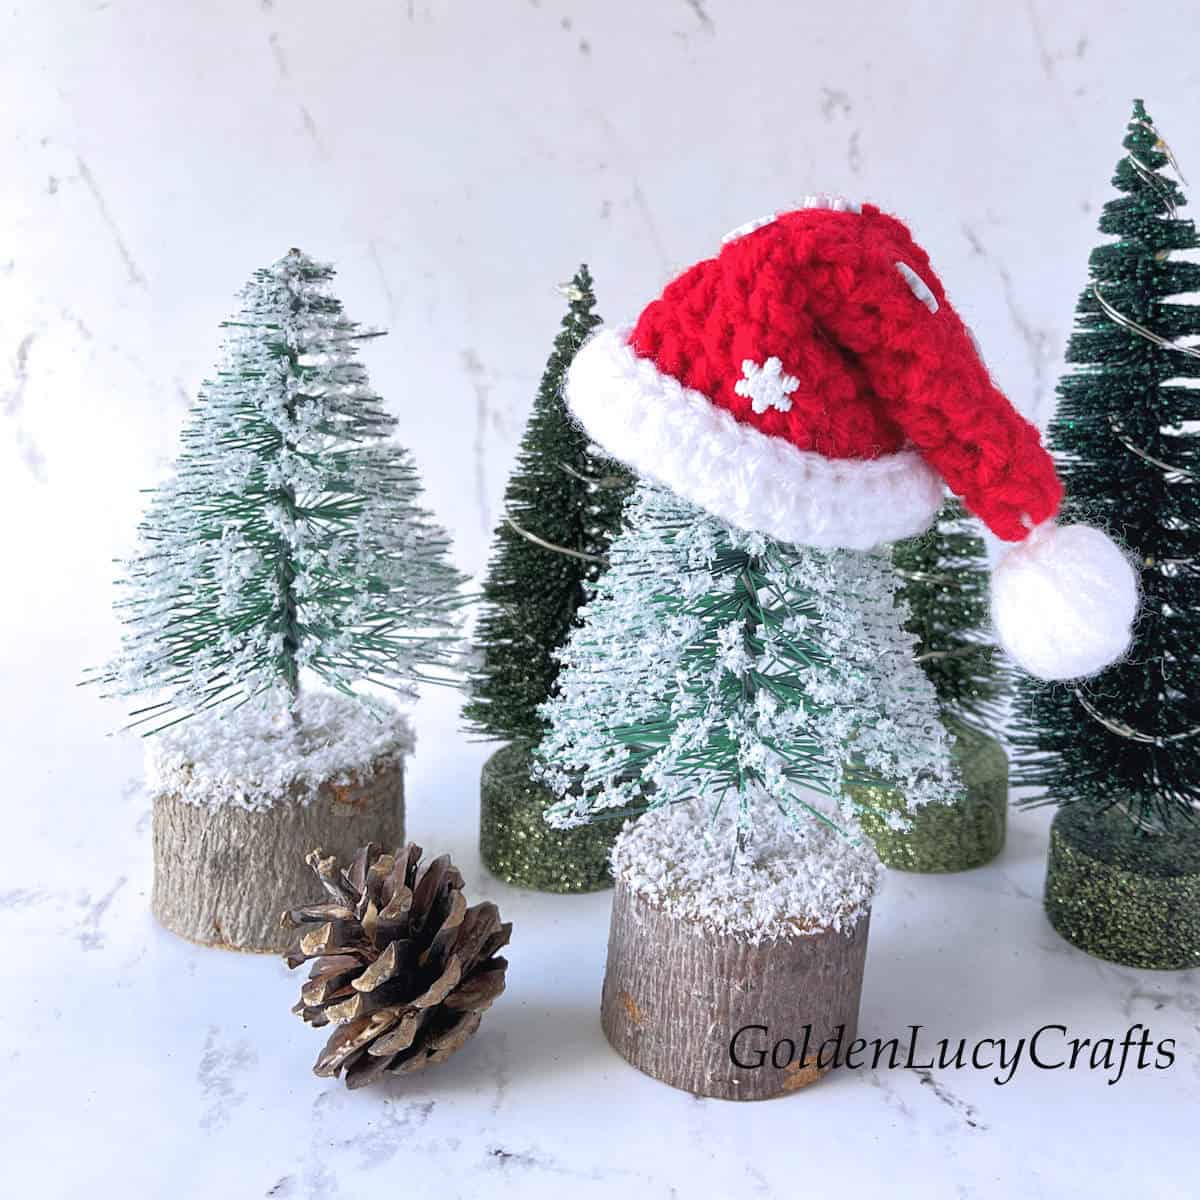 Crochet mini Santa hat on top of the miniature Christmas tree.